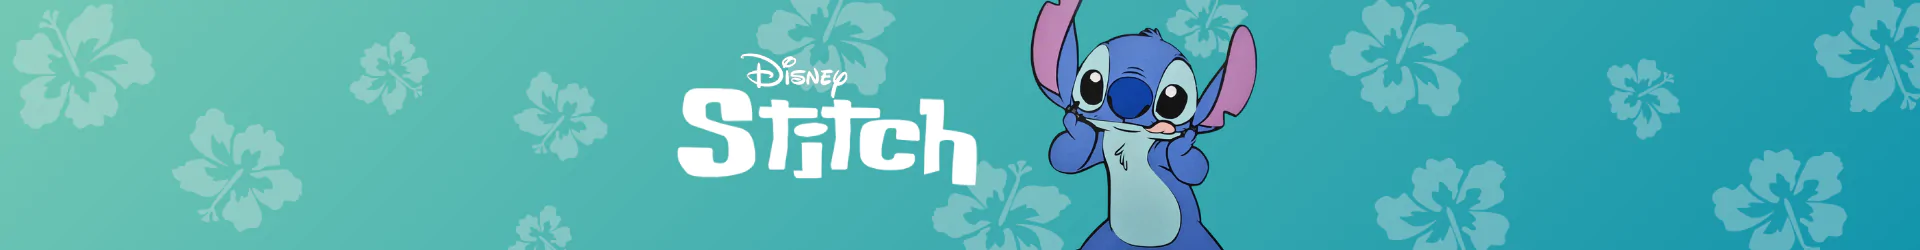 Stitch puzzles banner